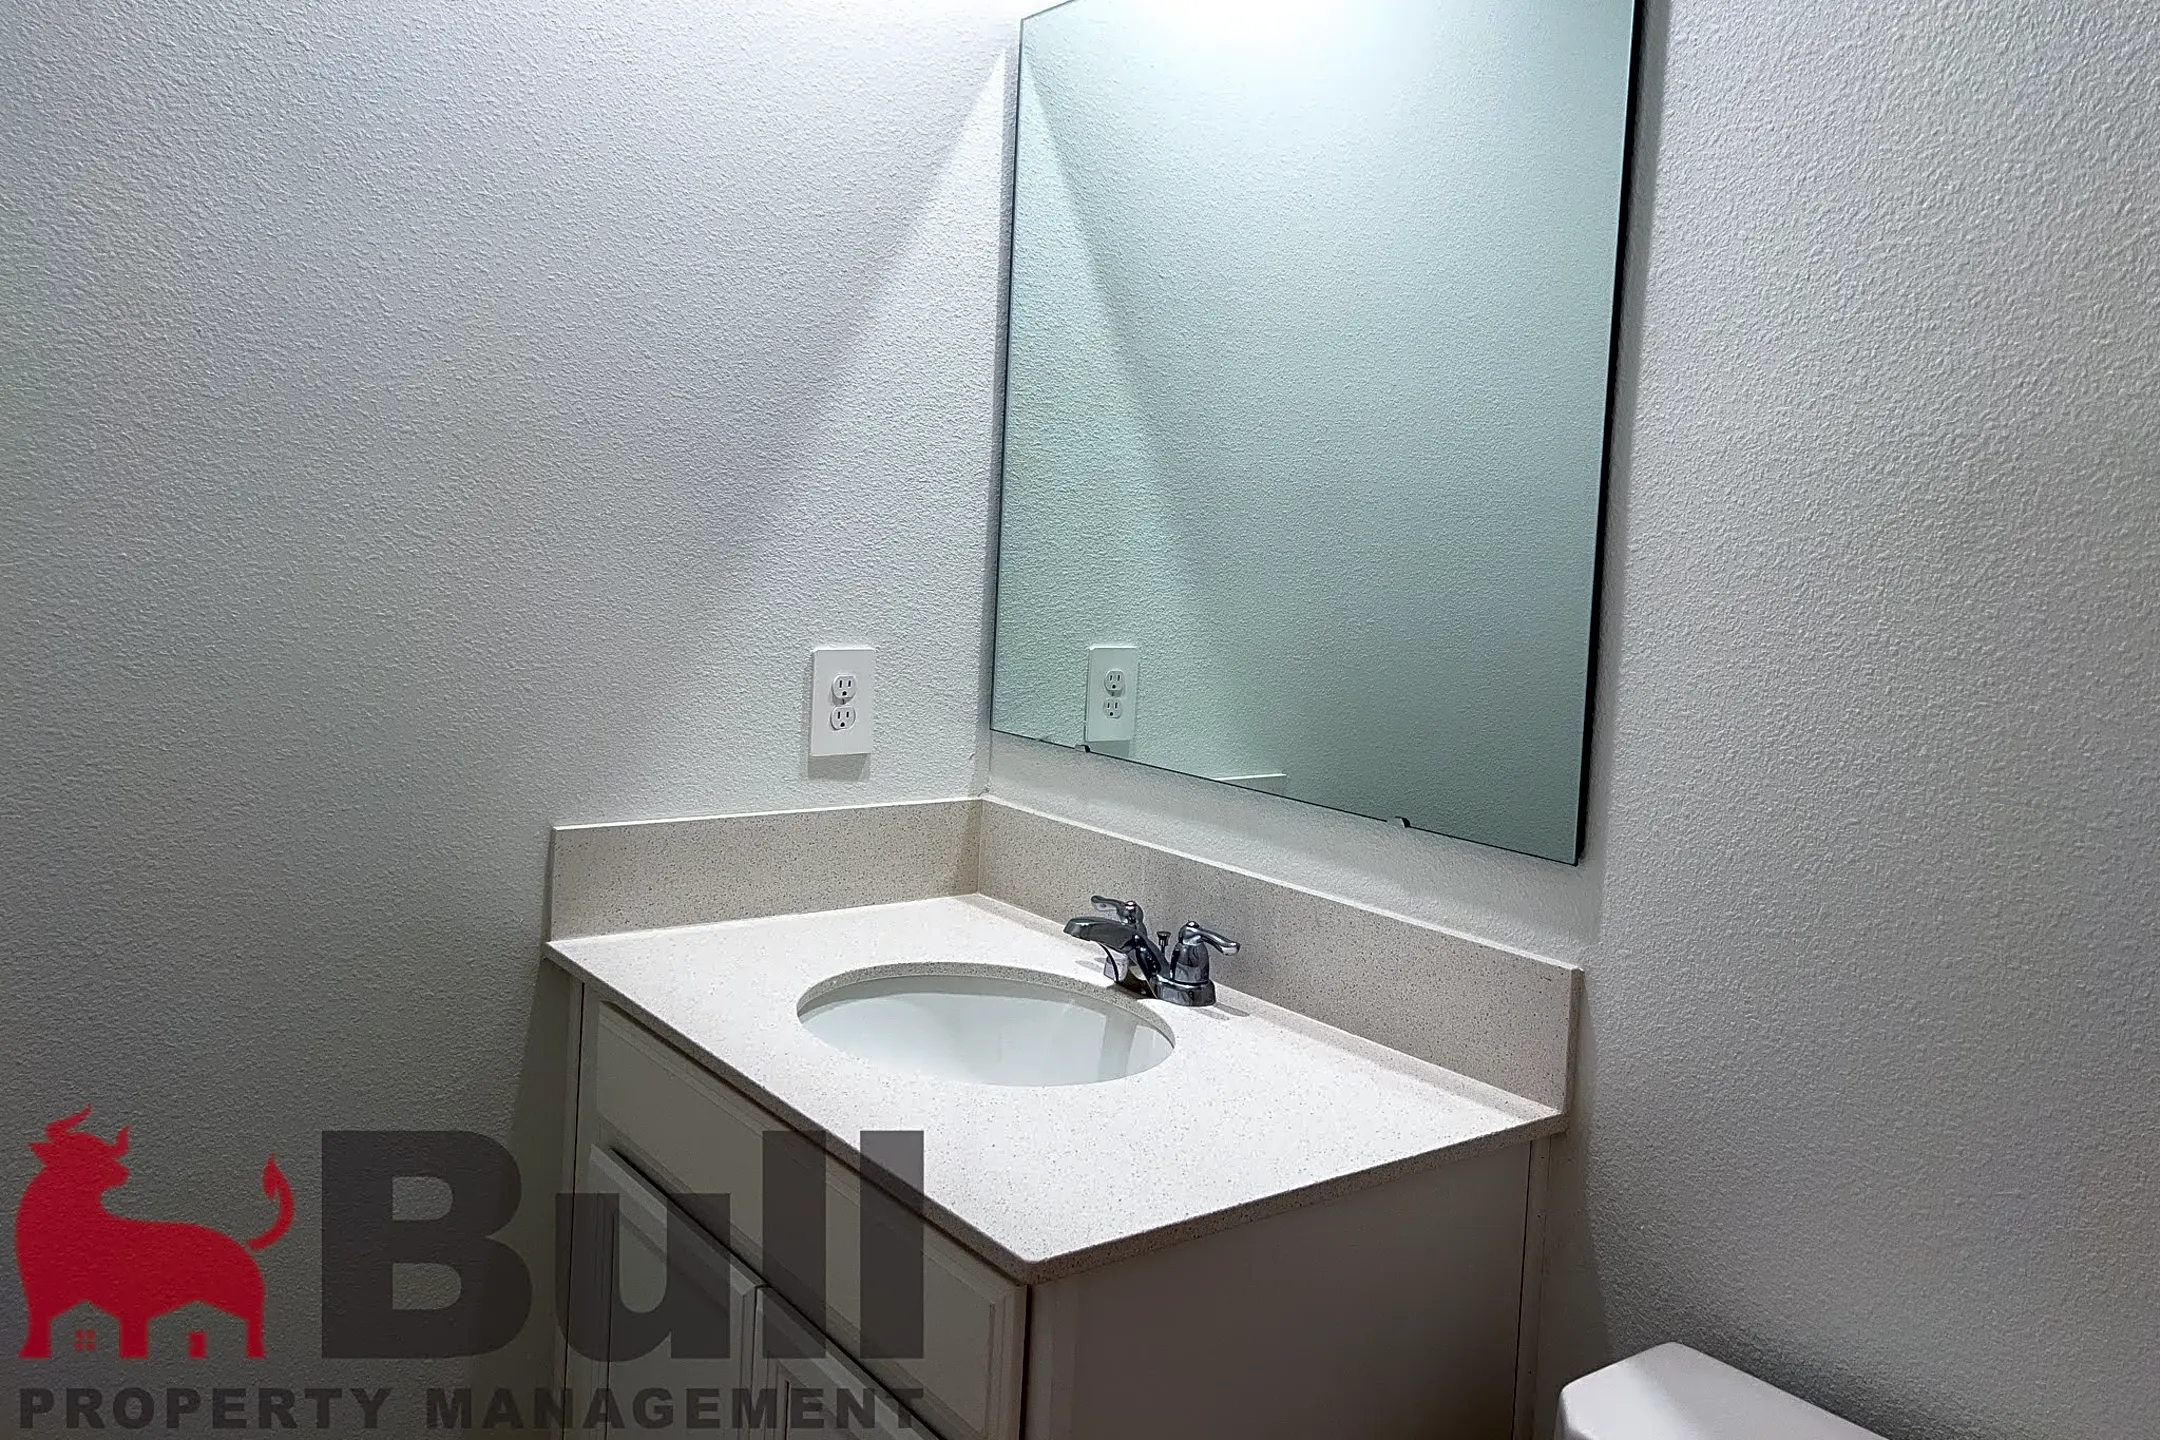 Bathroom - 7648 Danube Rd - Kissimmee, FL